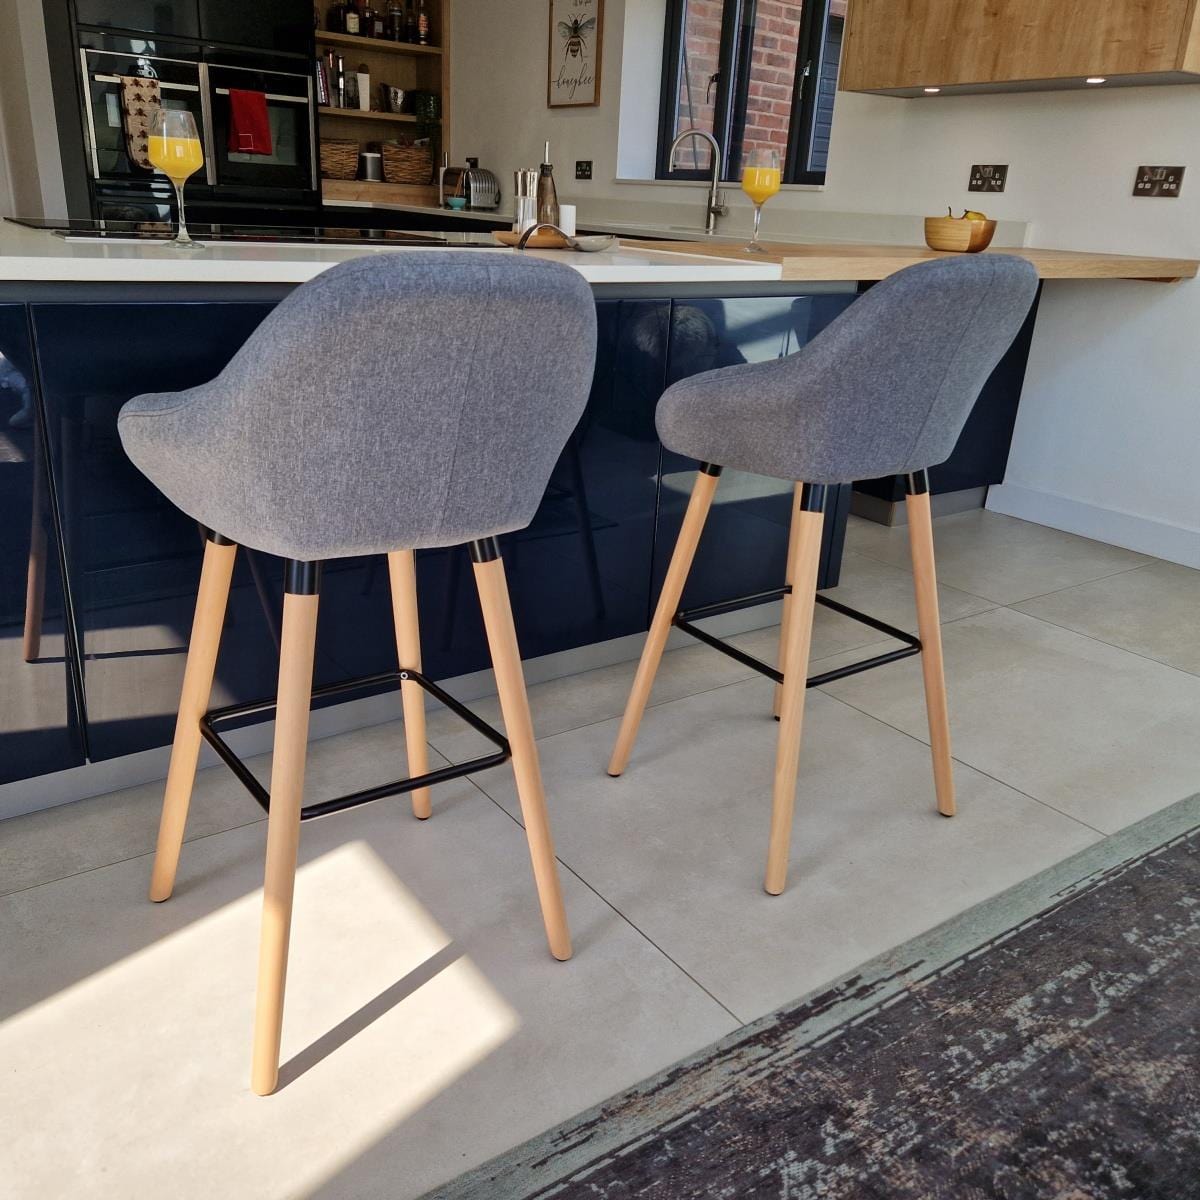 Quatropi Set of 2 Premium Bar Stools With Wooden Legs - Grey Fabric Kitchen Bar Stool